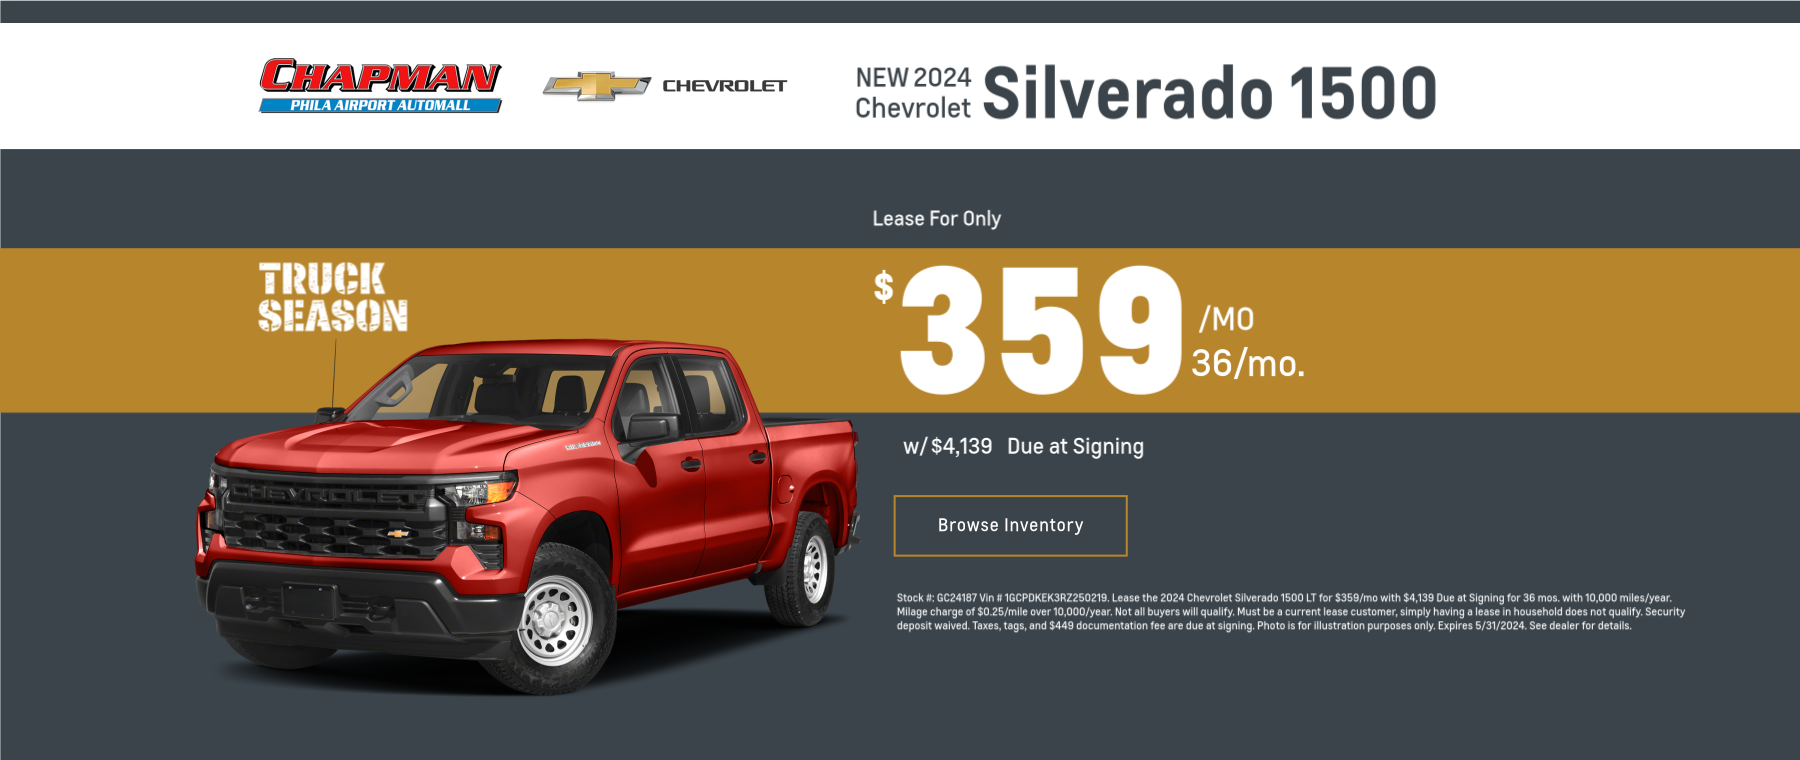 New Chevrolet Silverado 1500 Offer